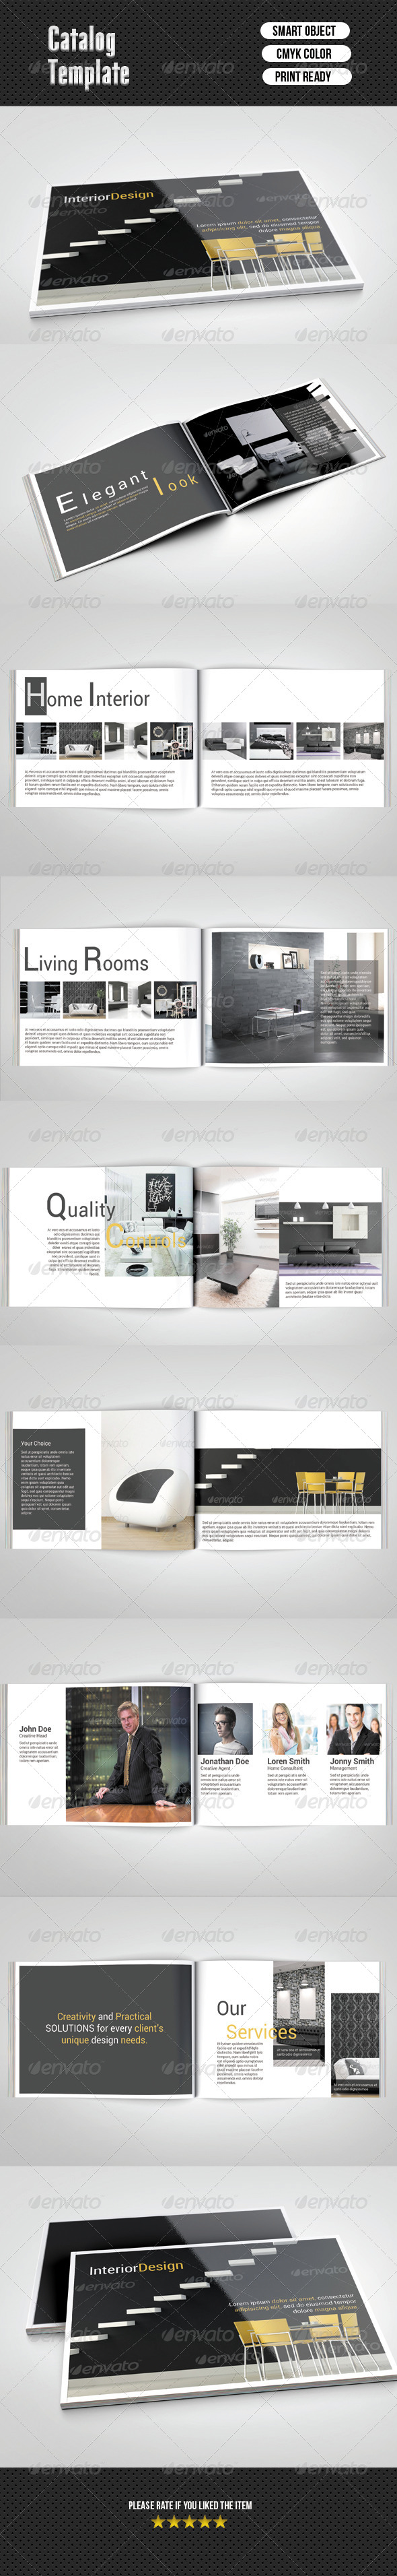 Catalog- Interior Design (16 Pages)